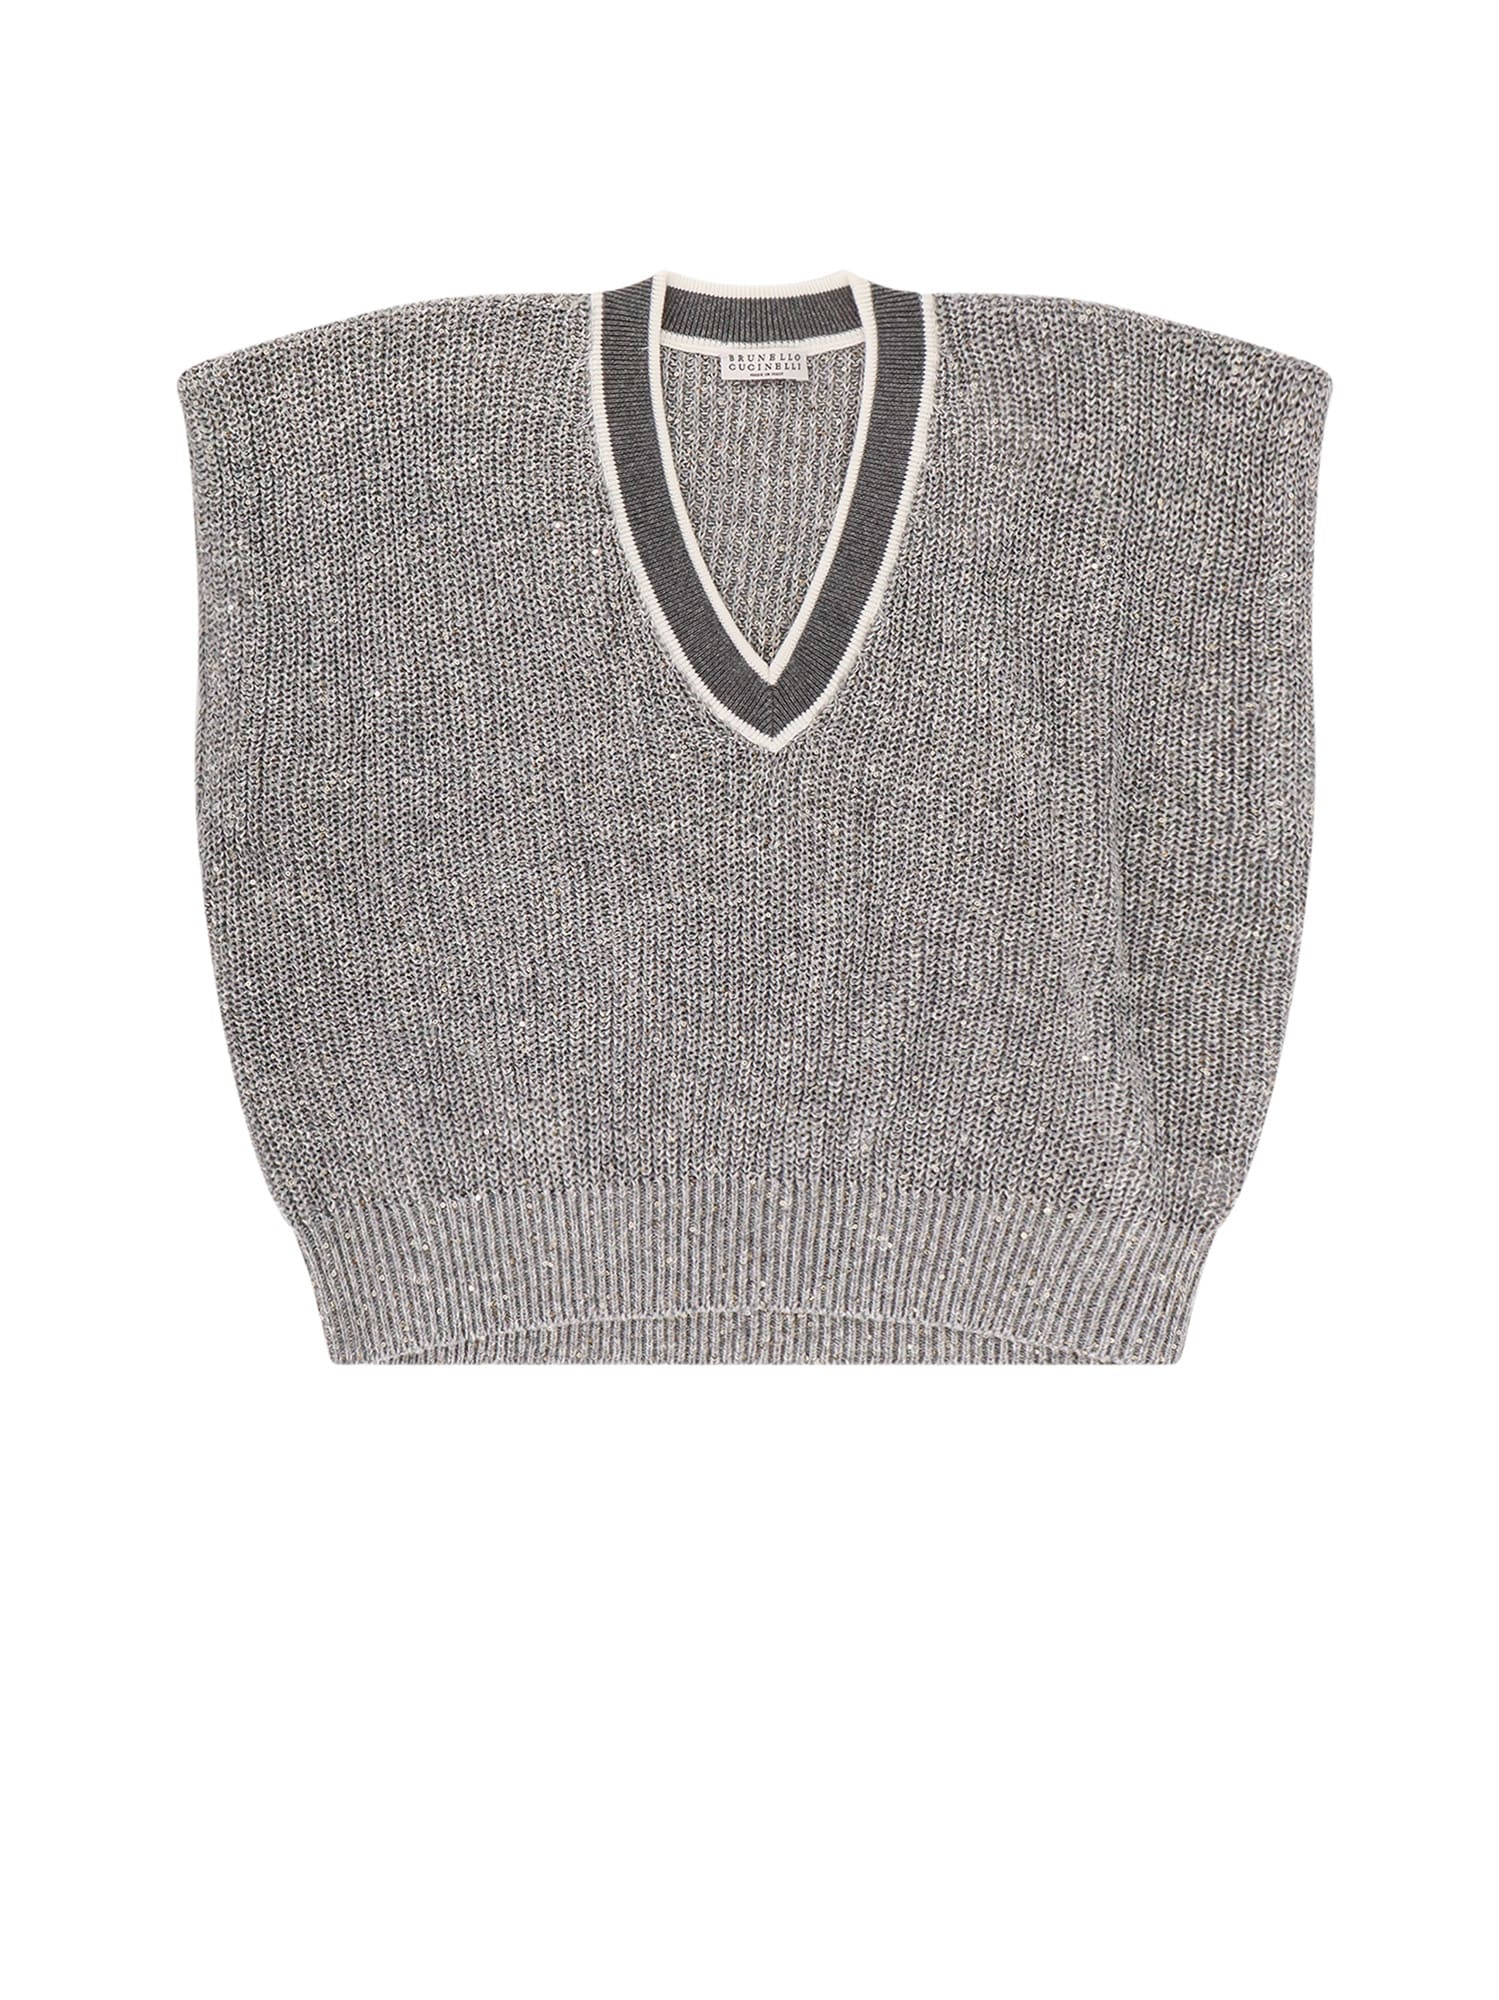 Brunello Cucinelli Sweater